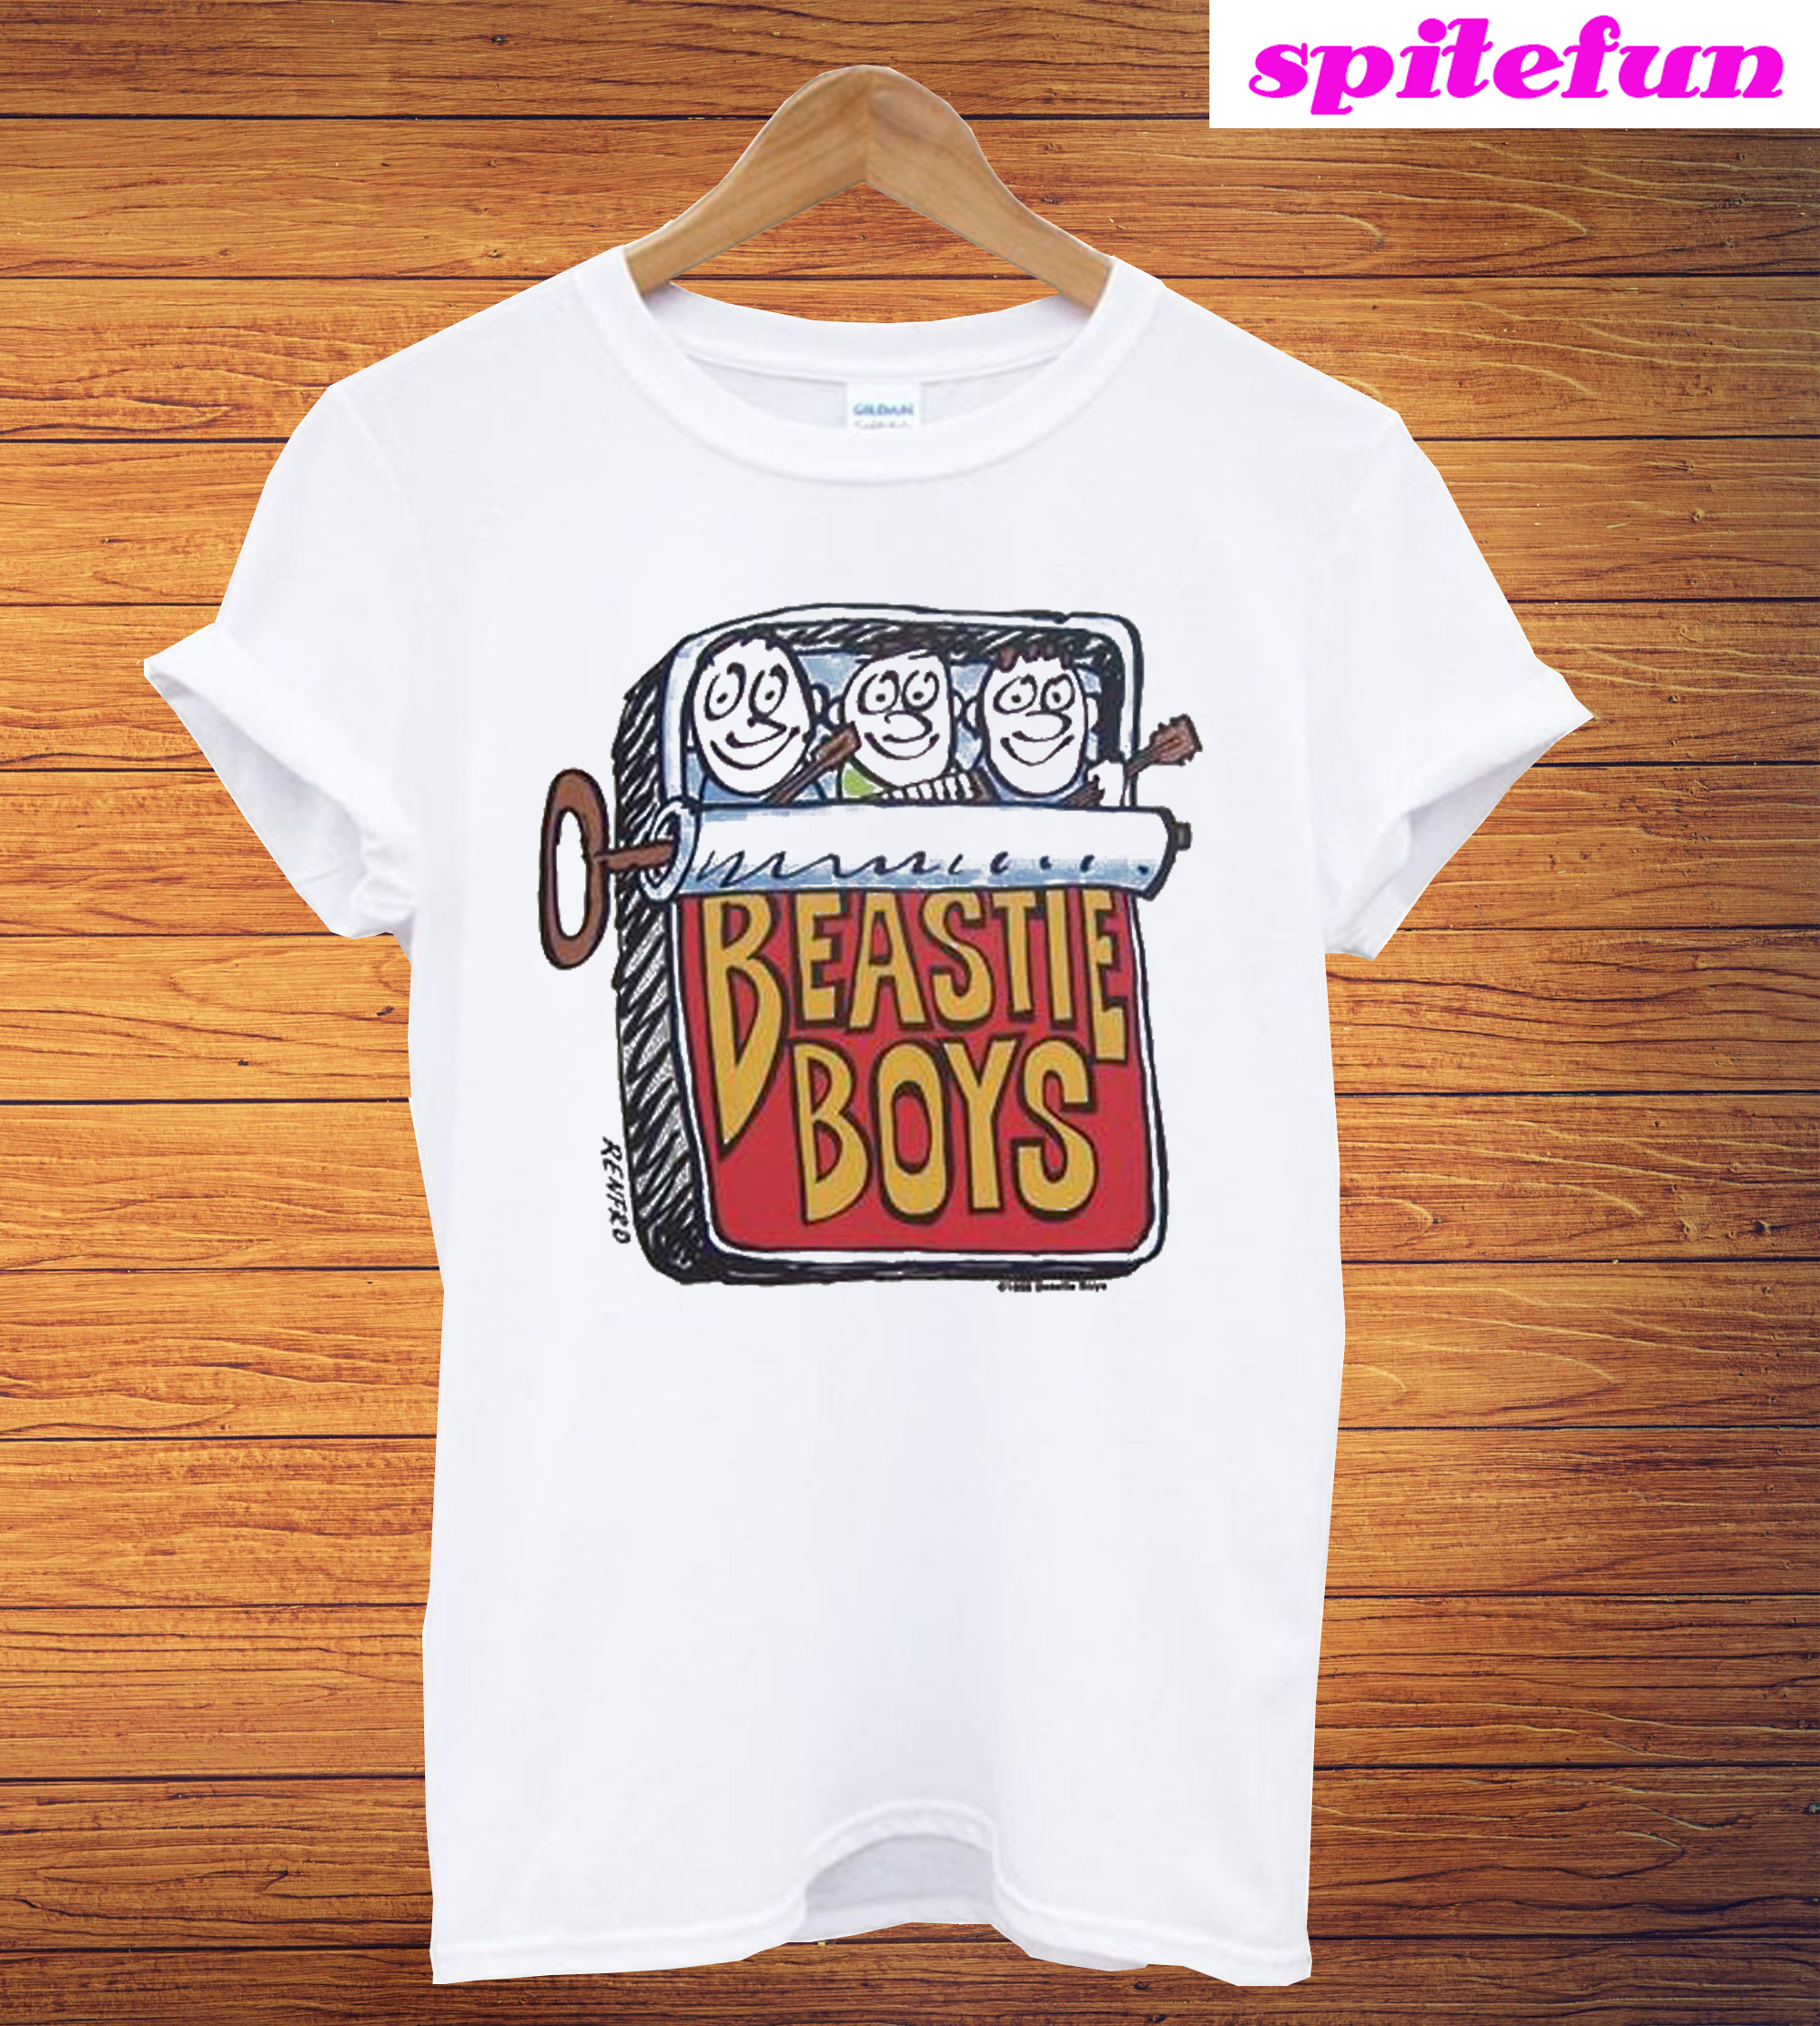 røgelse Solskoldning helt seriøst The Beastie Boys T-Shirt